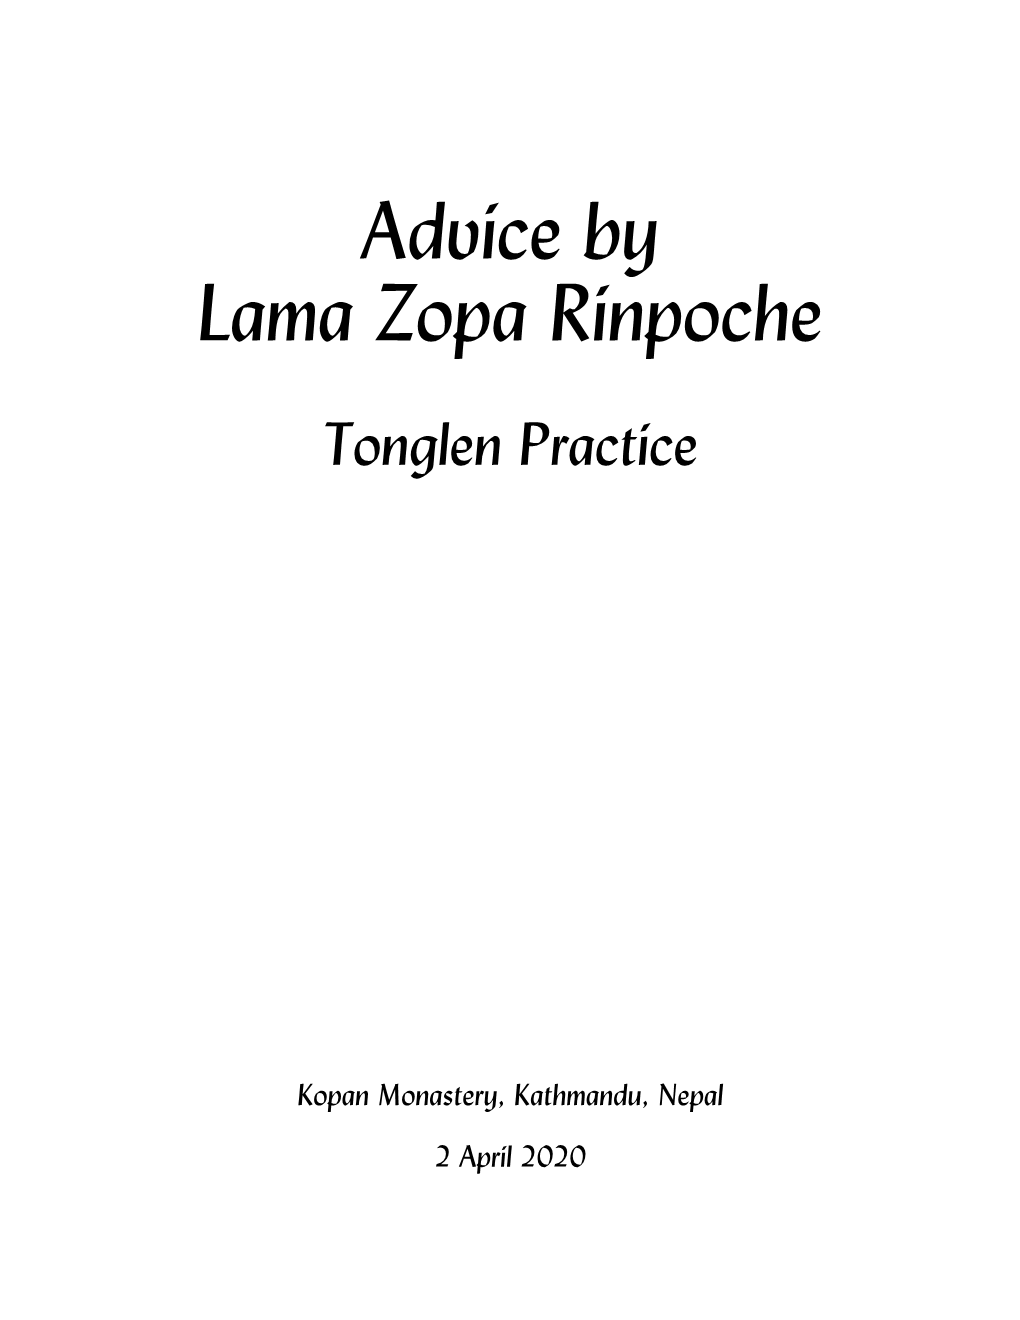 Advice by Lama Zopa Rinpoche